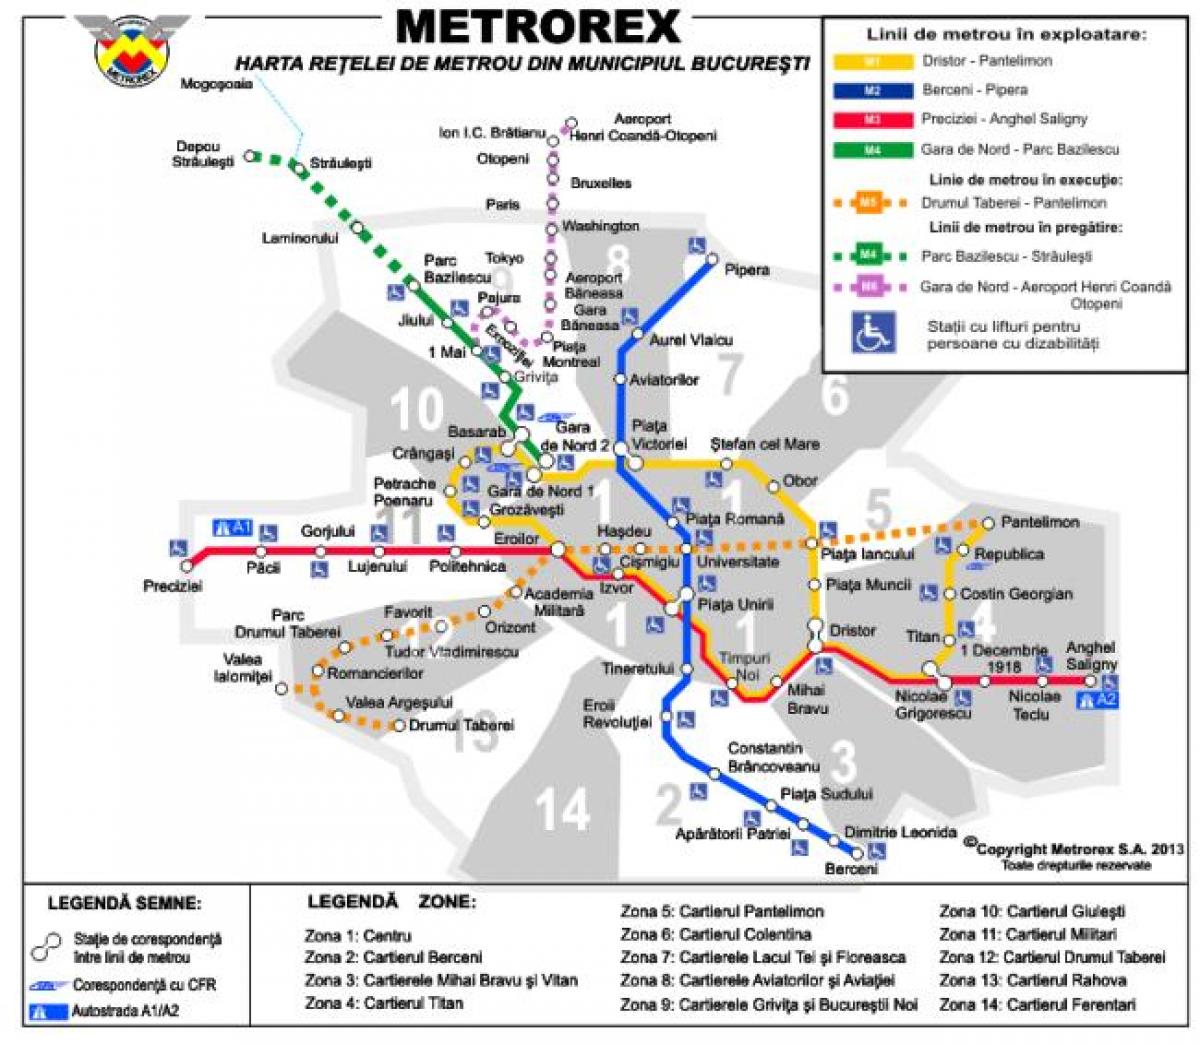 mapa do metropolitano de bucareste